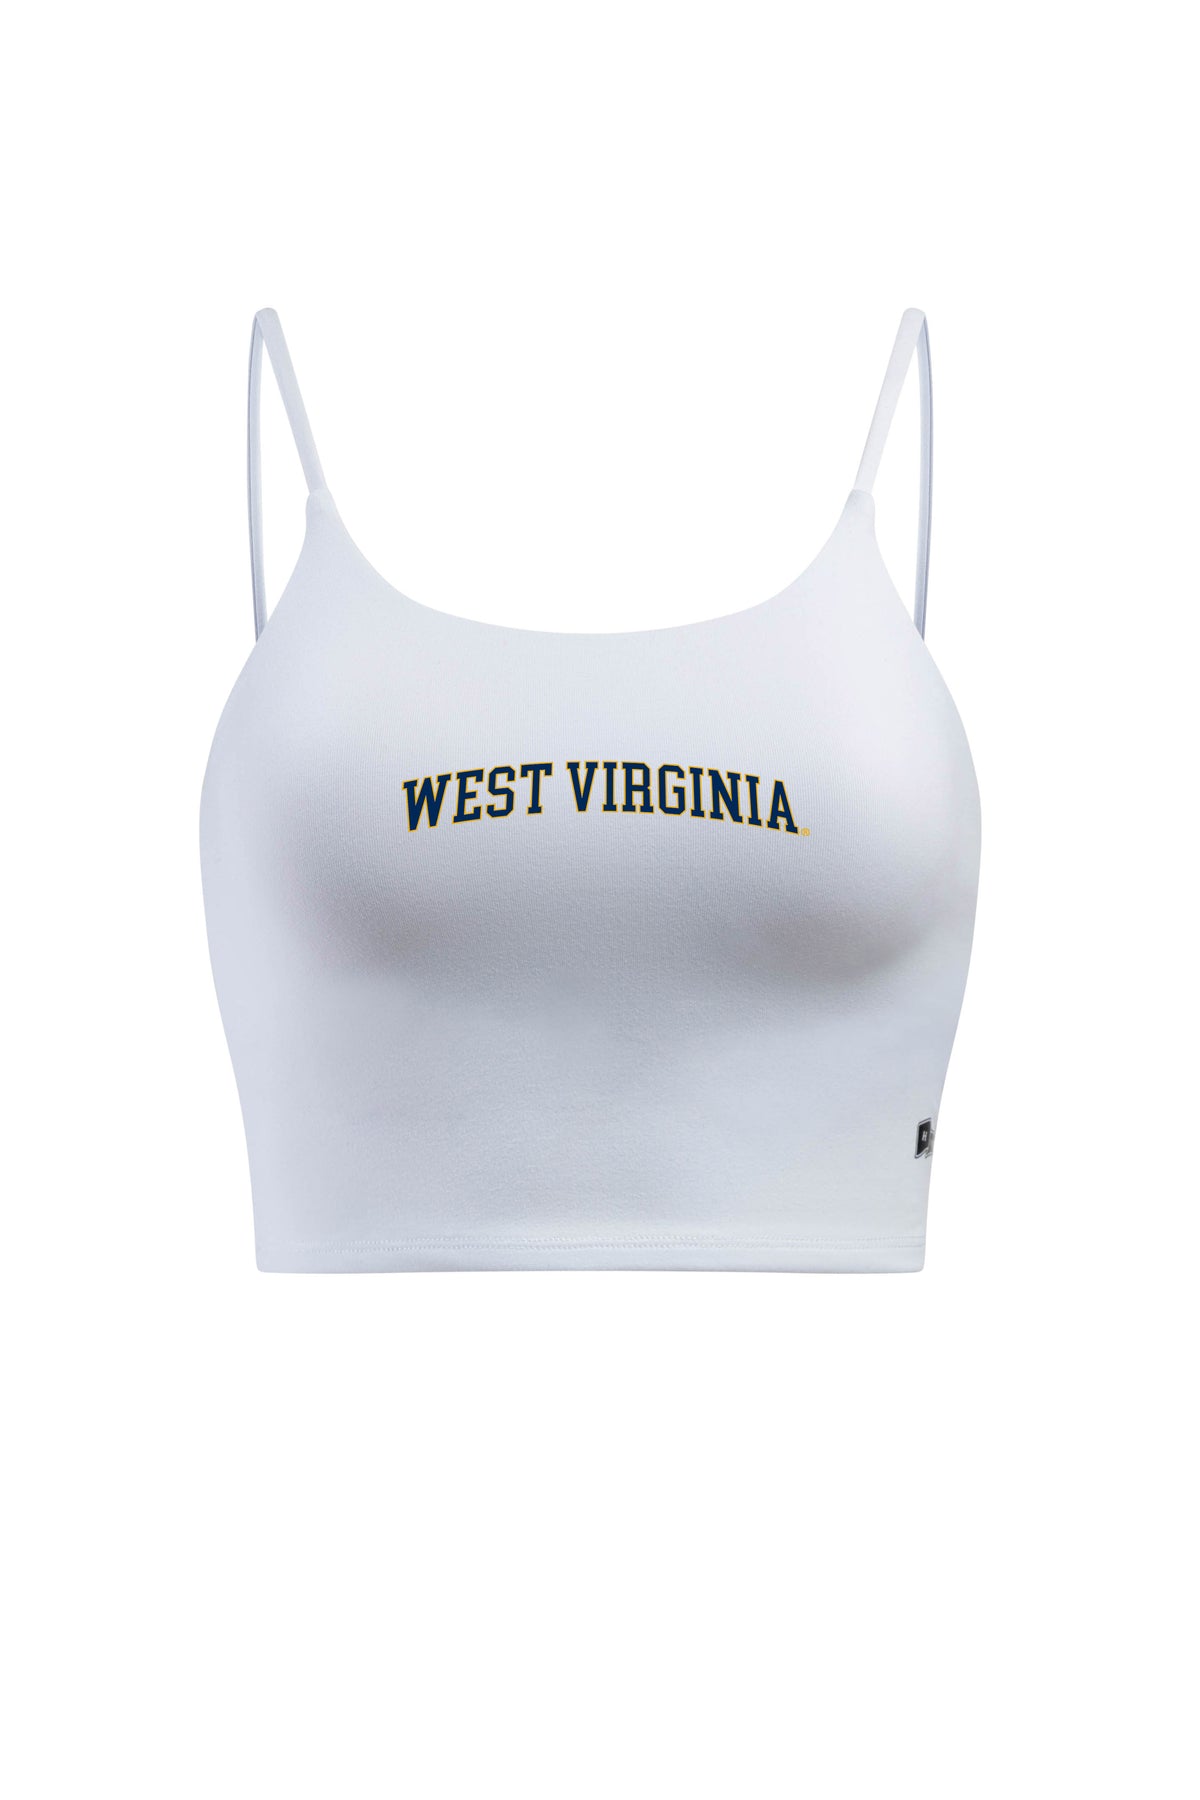 West Virginia University Bra Tank Top